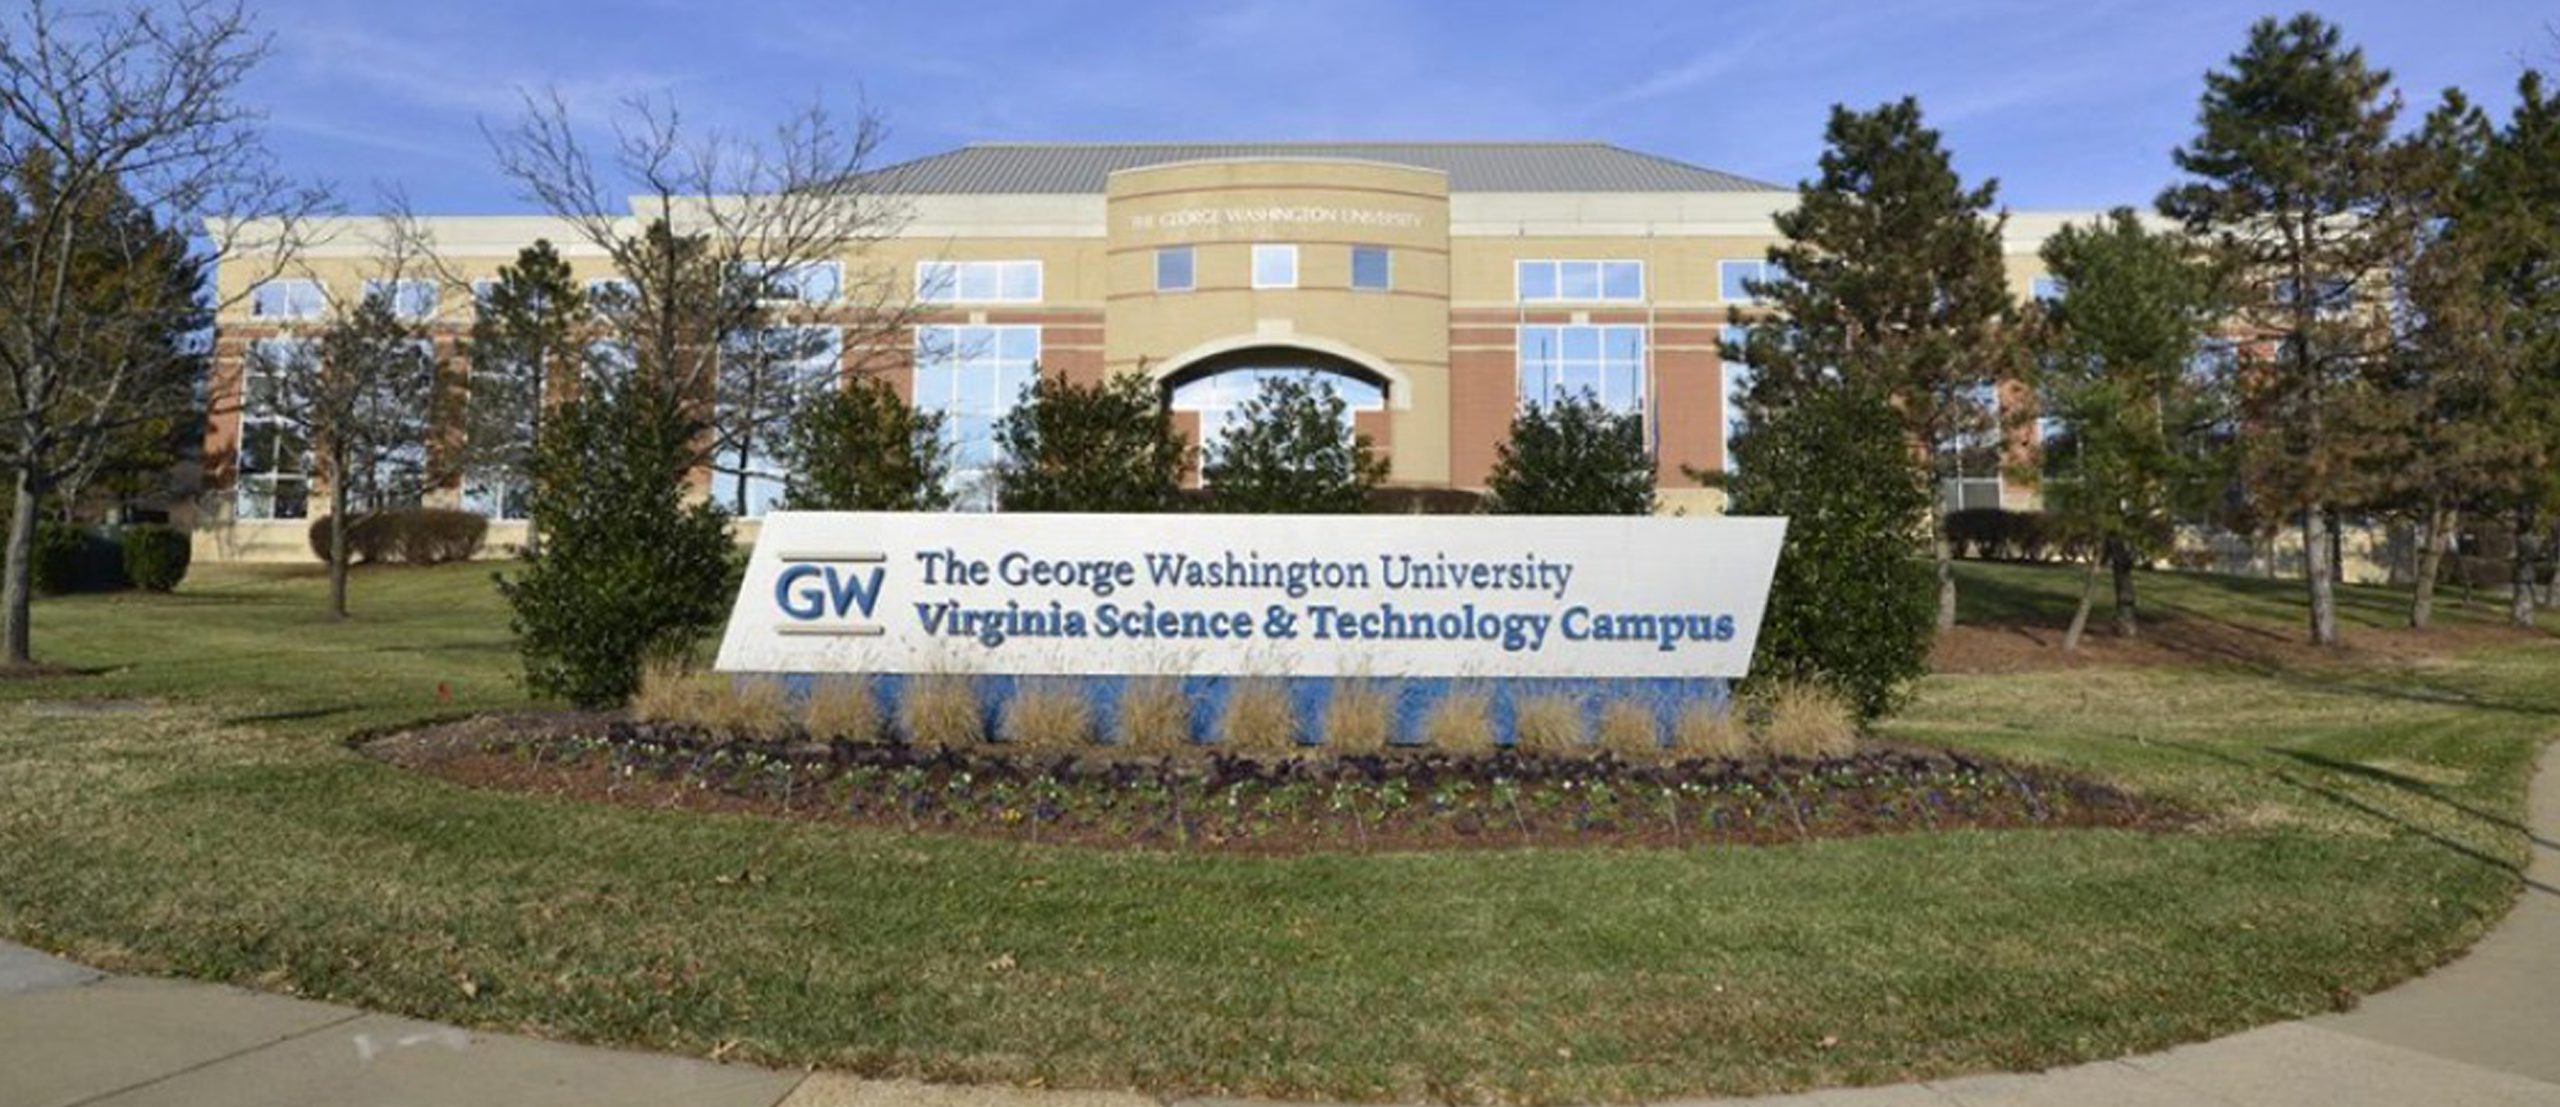 George Washington University Virginia Science and Technology Campus